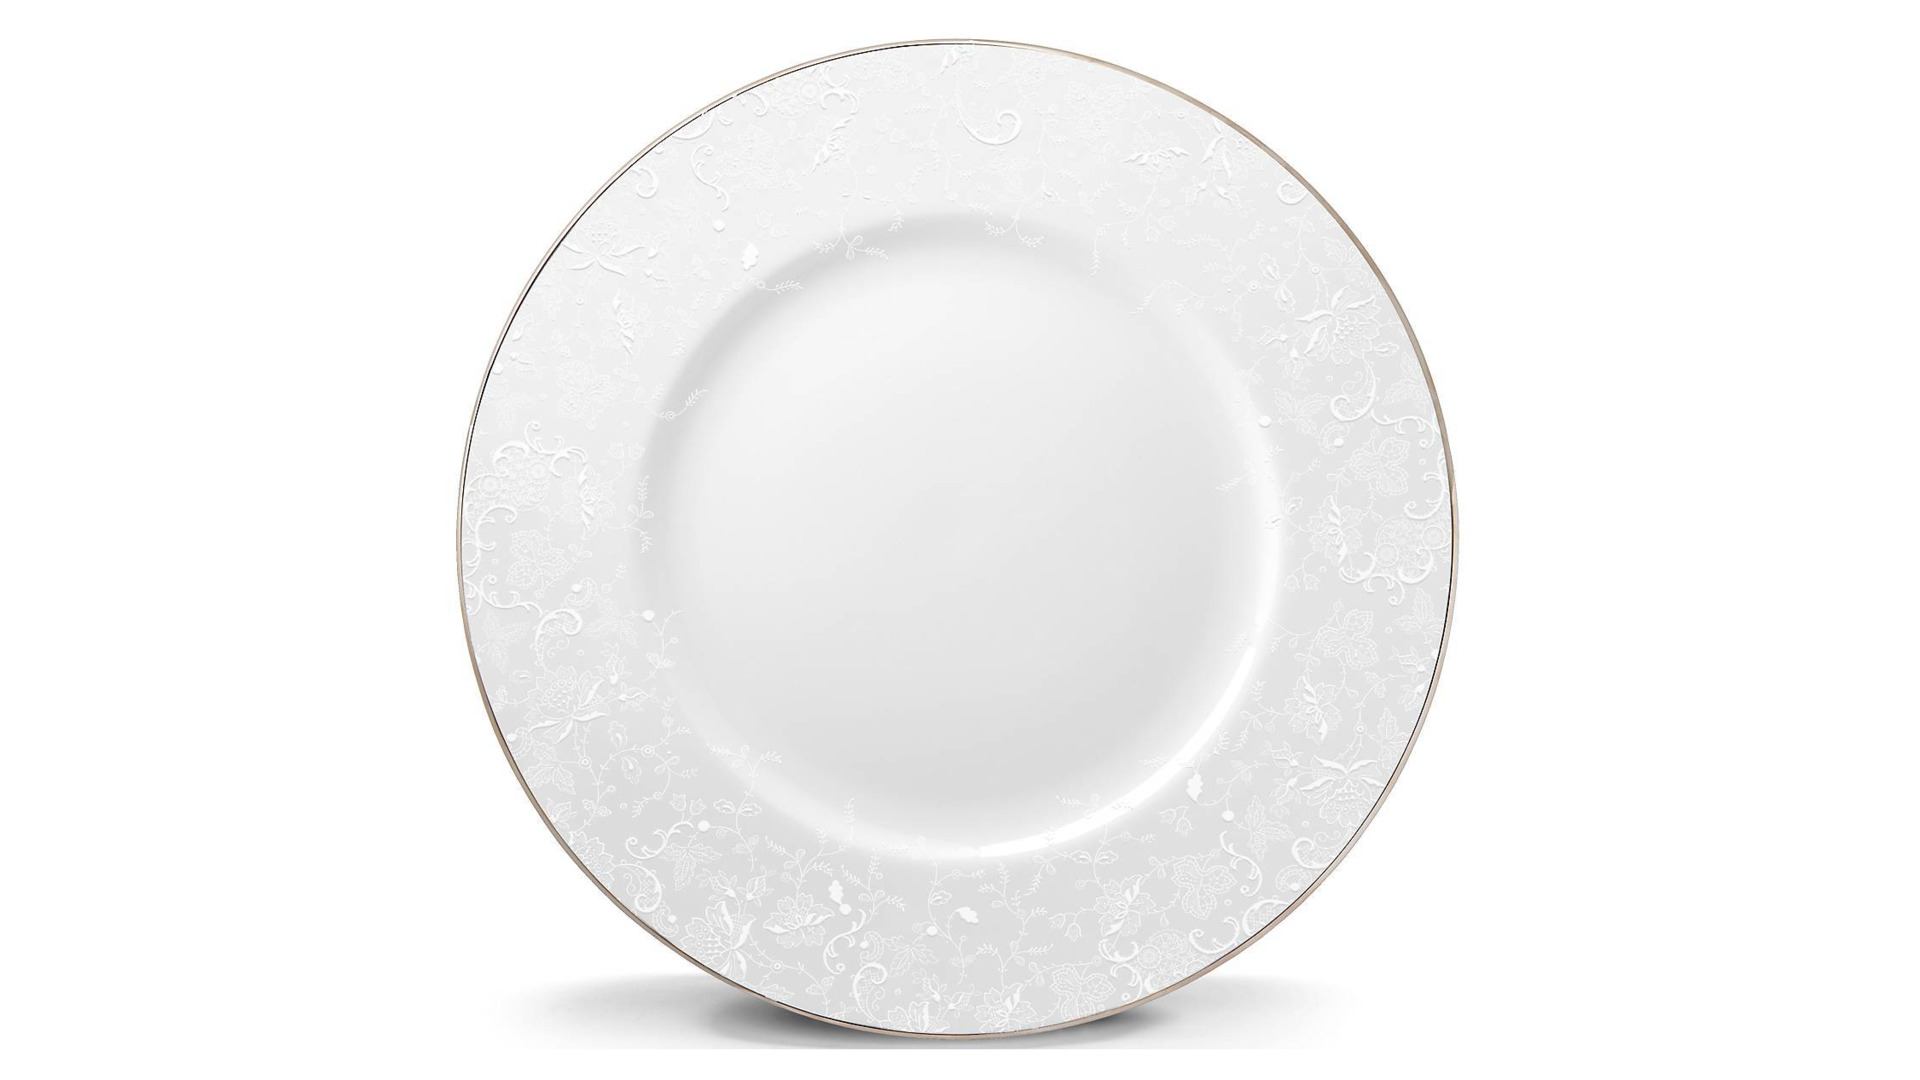 Тарелка обеденная Lenox Фарфоровое кружево Маркеса 27 см